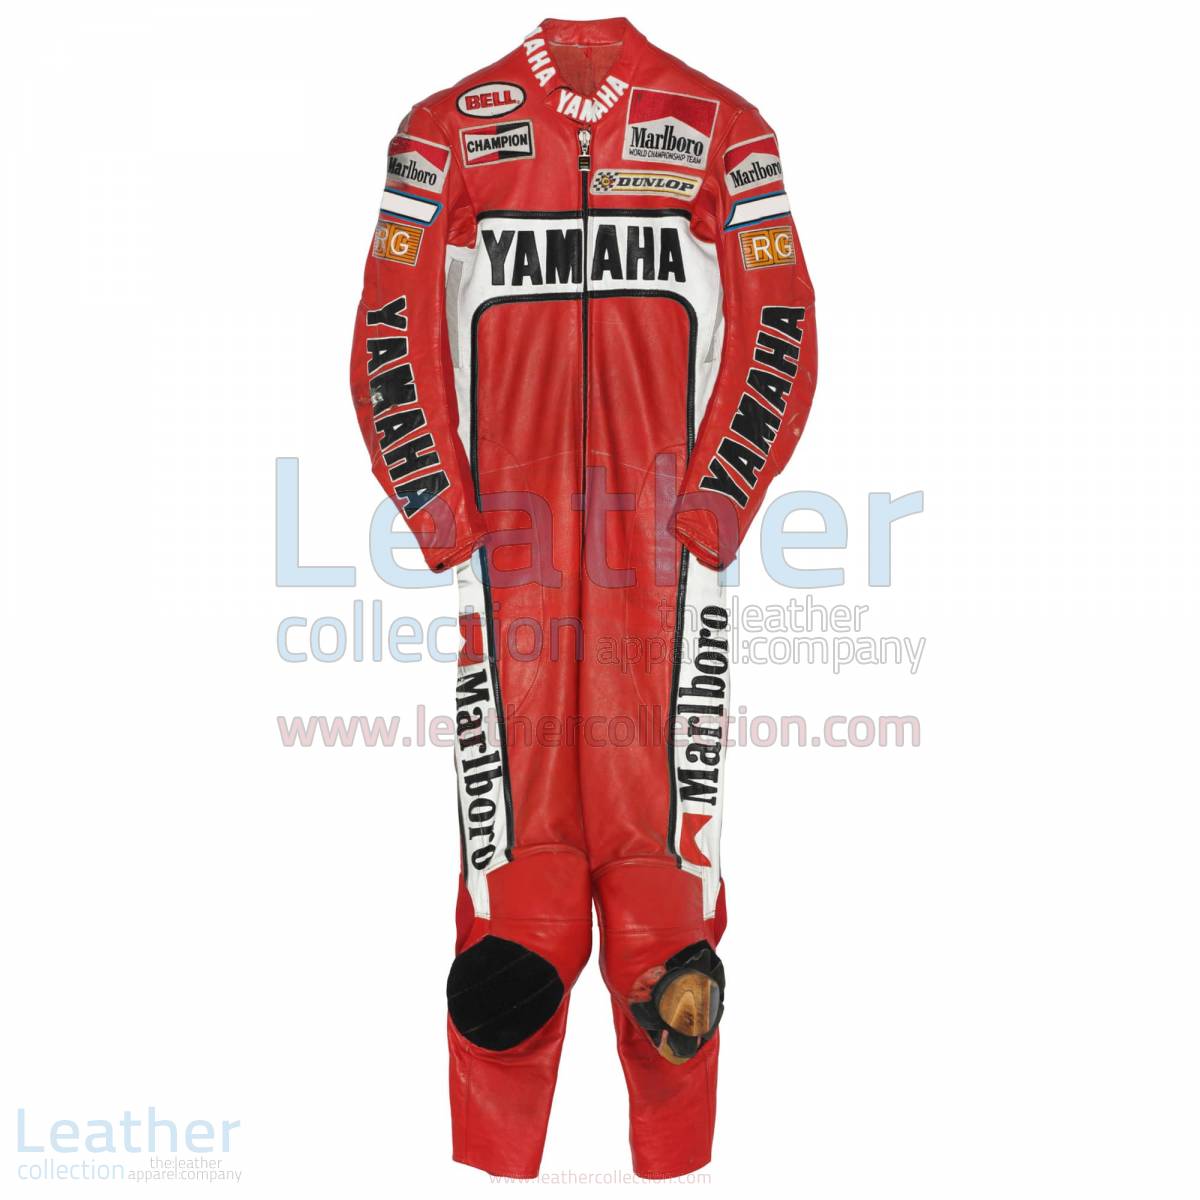 Eddie Lawson Marlboro Yamaha GP 1988 Leathers – Yamaha Suit